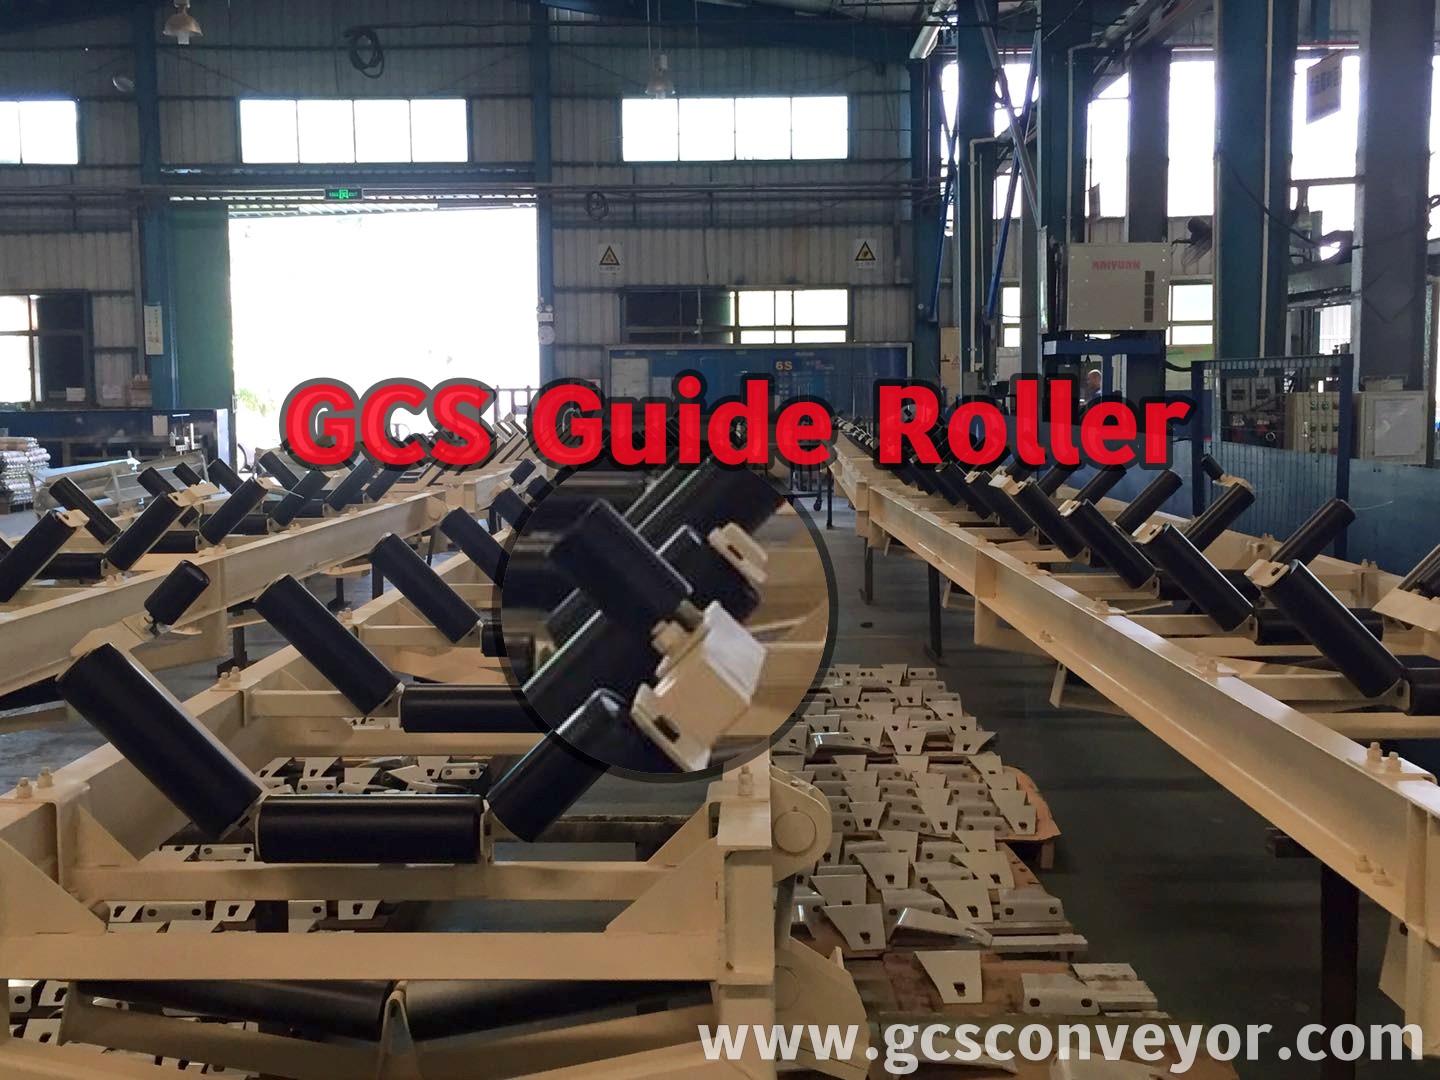 Iyini i-conveyor guide roller?